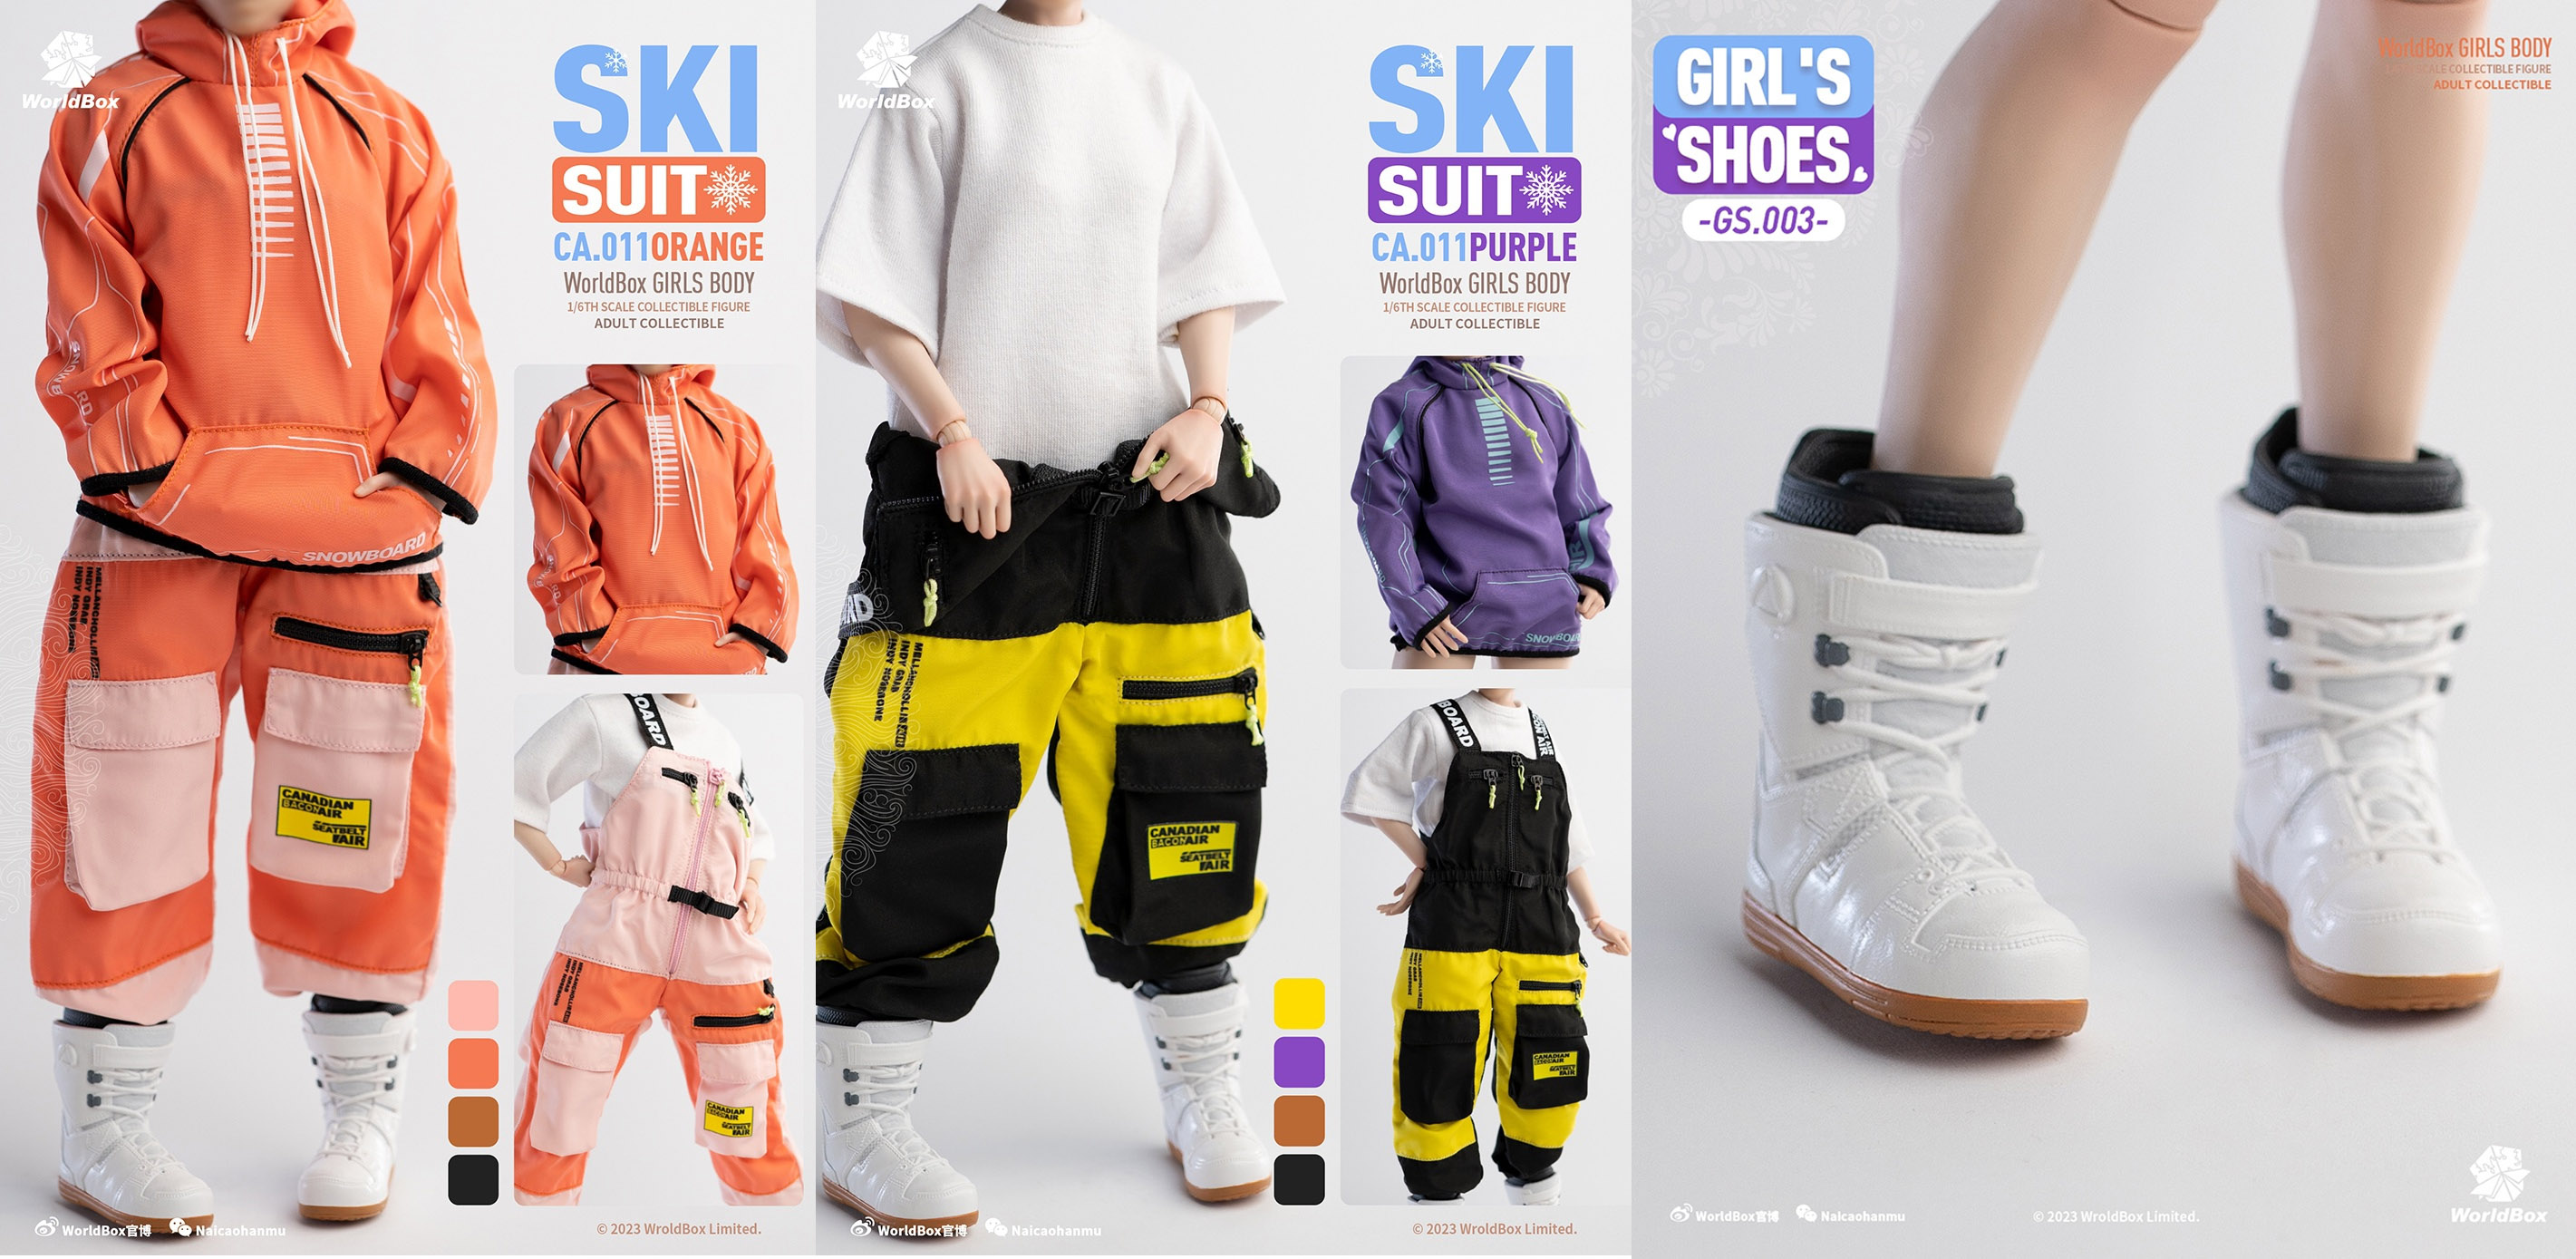 ski - NEW PRODUCT: Worldbox Winter Snow Wear Orange Purple Suit CA011 & Ski Shoes GS003 0028